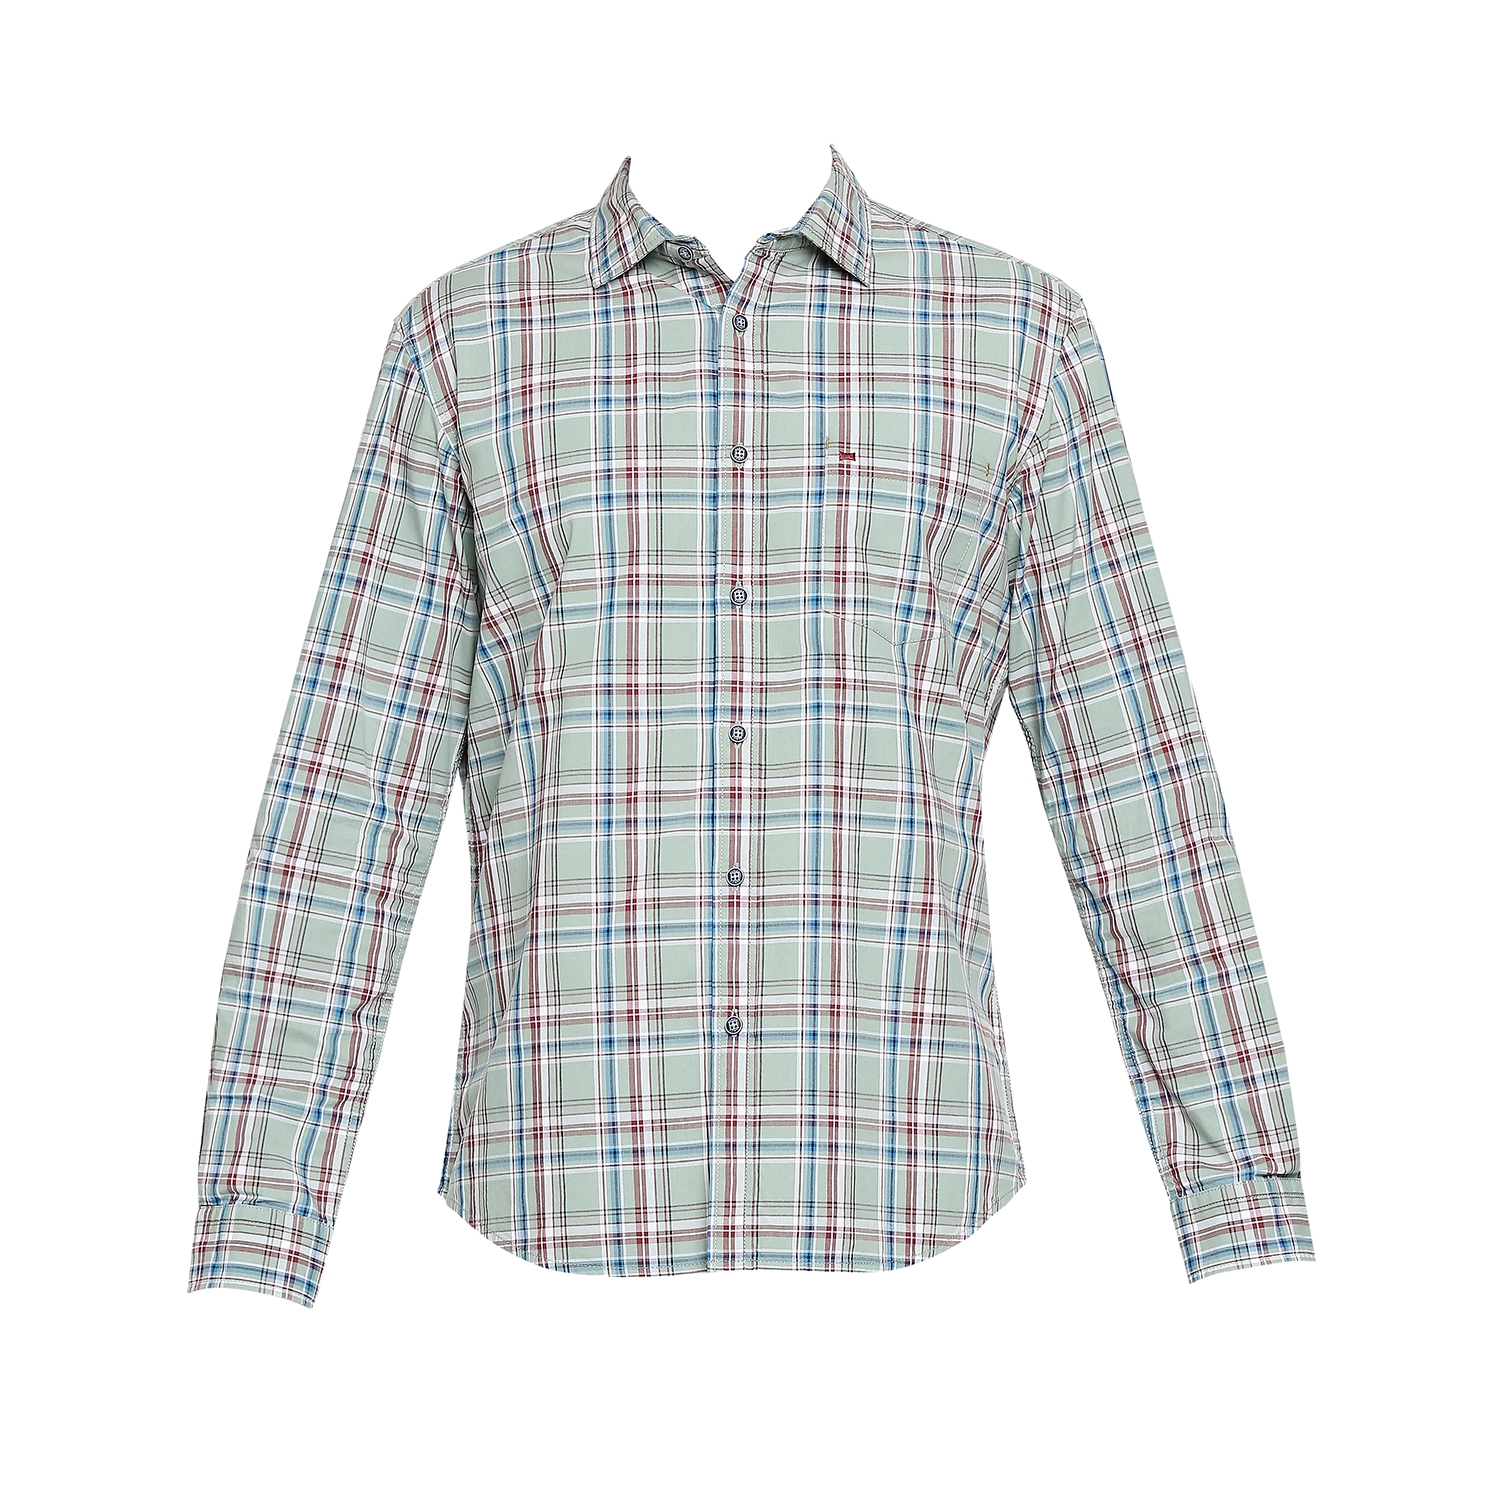 Basics | Men's Green Cotton Checked Casual Shirt 5